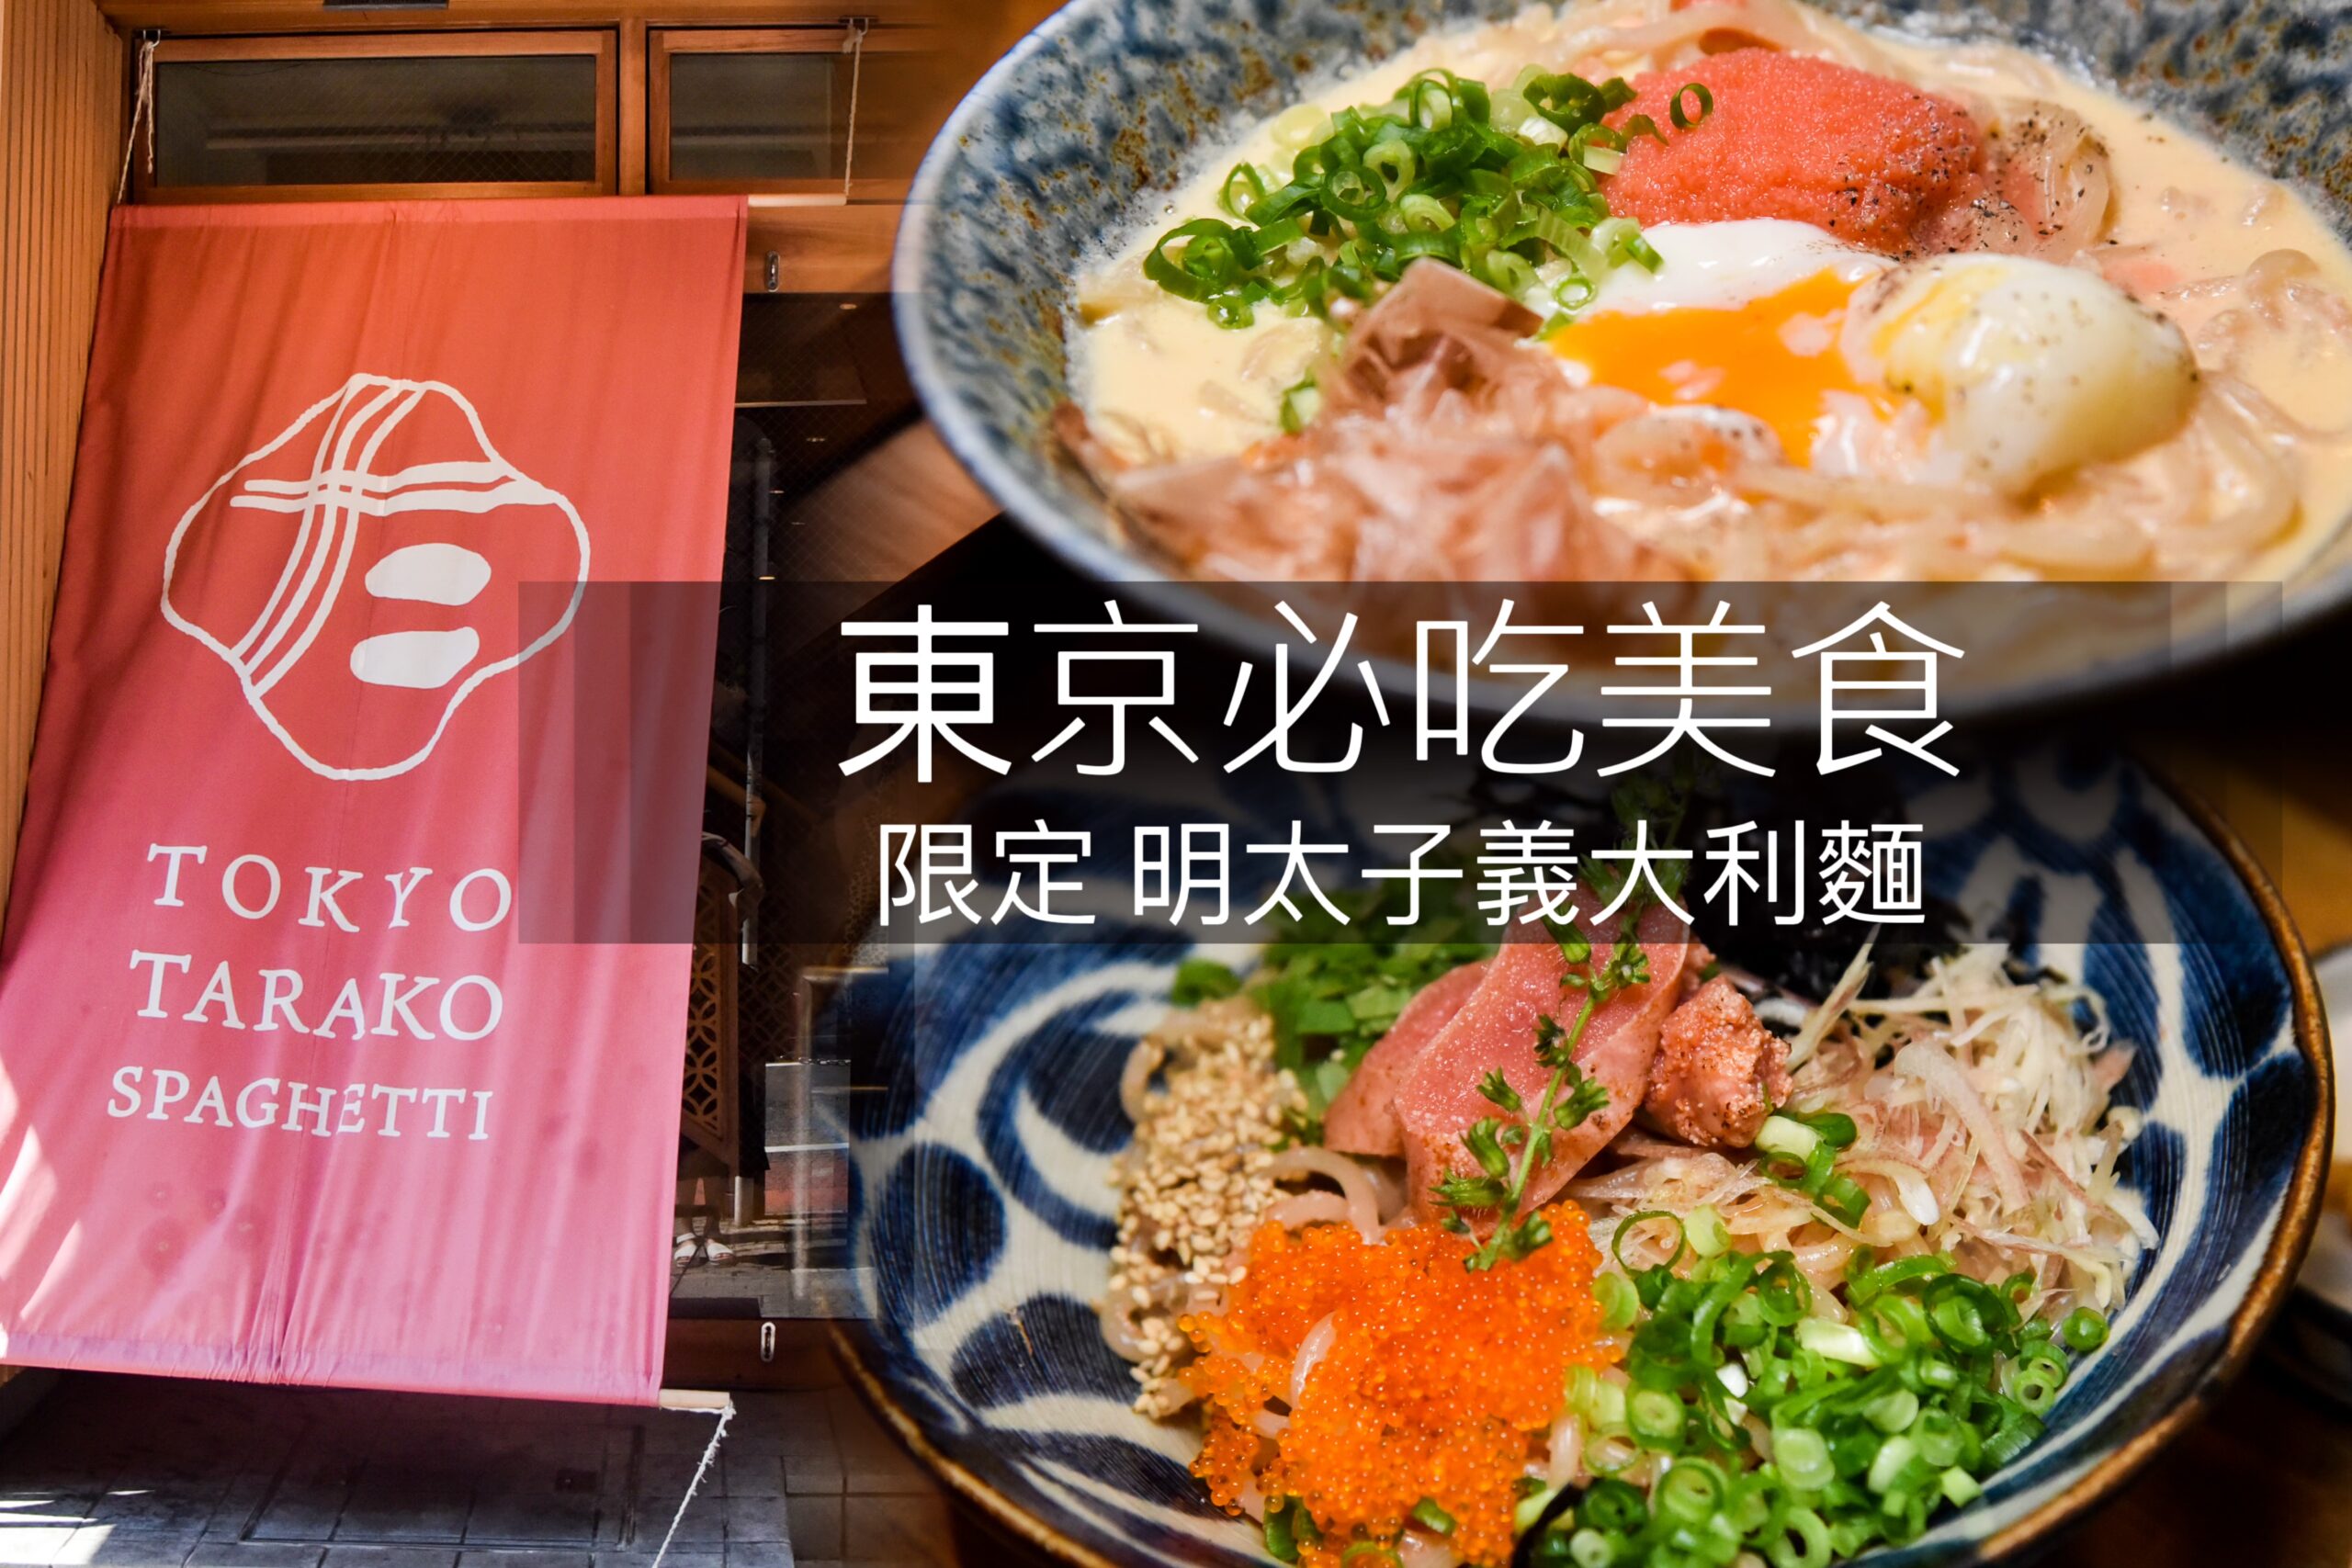 [日本] 東京。最特別的沾醬拉麵 TETSU 三鷹店|つけめん |京都車站也有 @ELSA菲常好攝